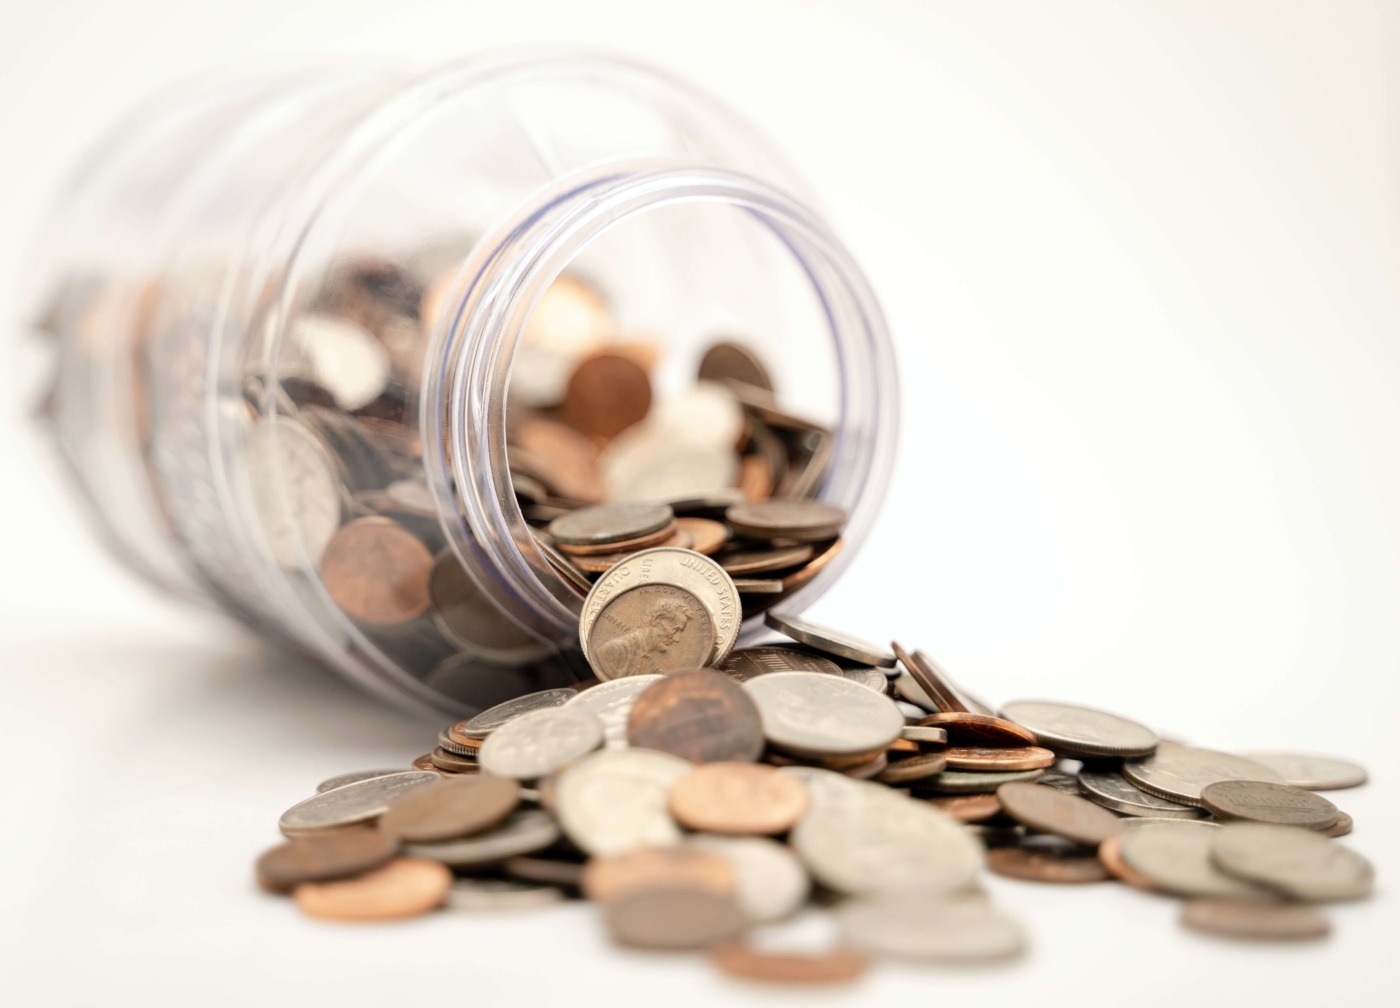 Jar filled with money, tipped over / Image: Unsplash